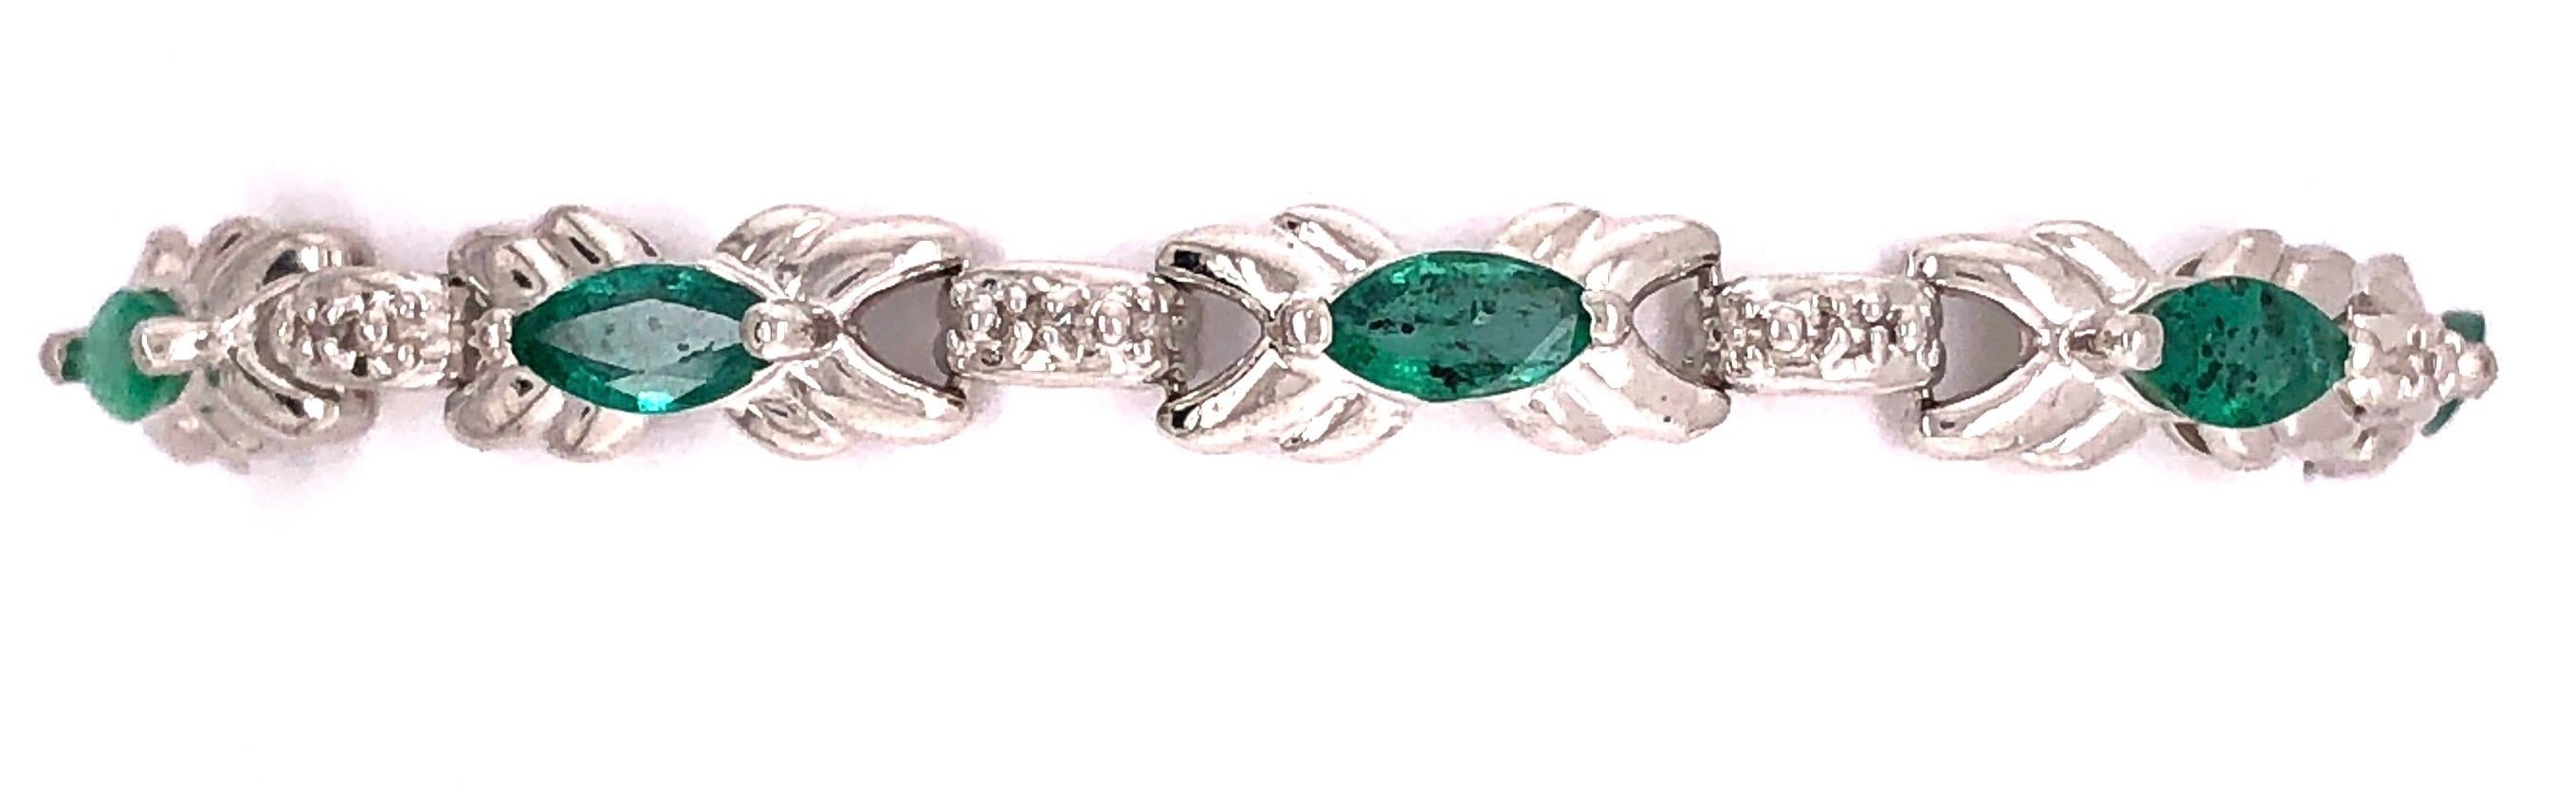 14 Karat White Gold 7 Inch Emerald Bracelet with Round Diamonds.
11.7 grams total weight.

